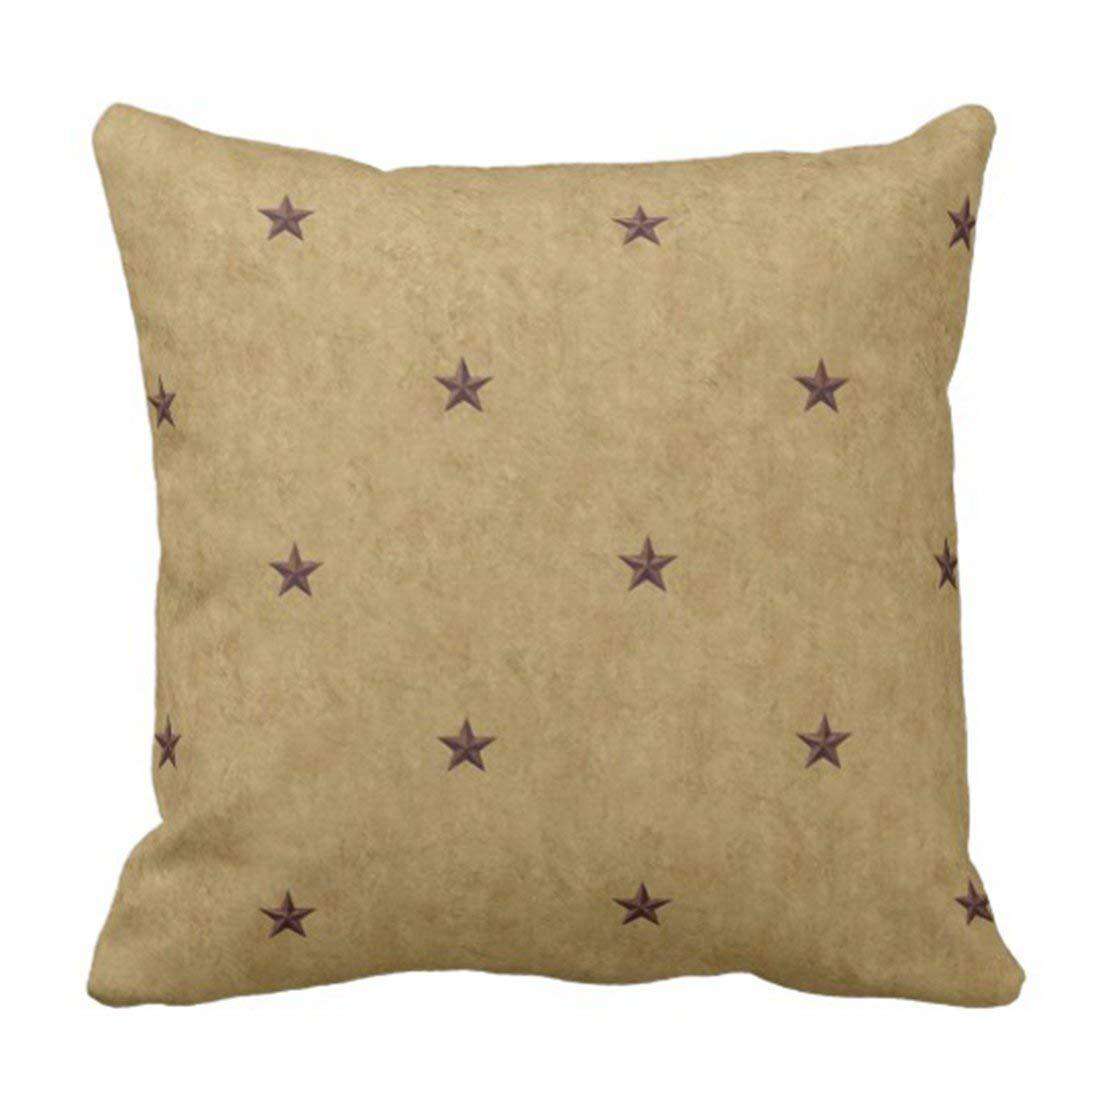 Country Primitive Americana Stars Pillow Cover pillow The Fox Decor 